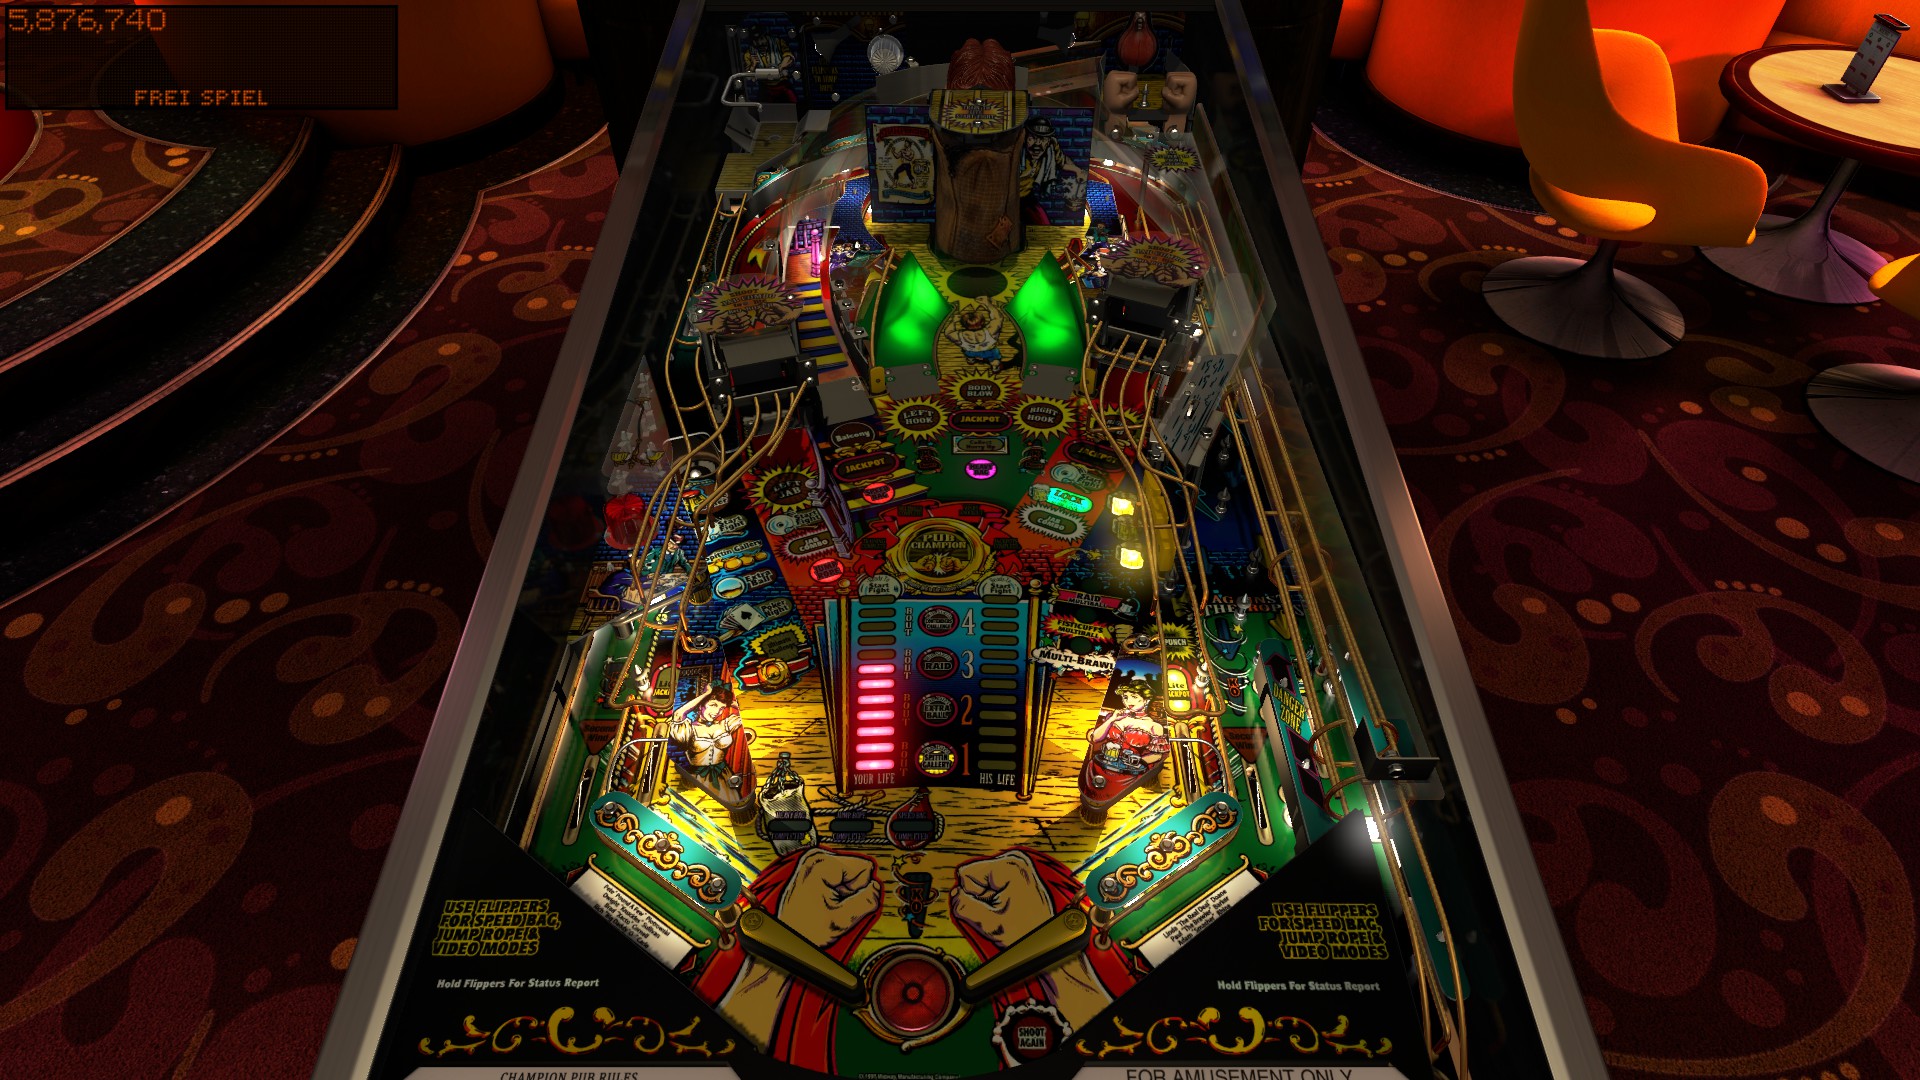 e2e4: Pinball FX3: The Champion Pub [Arcade] (PC) 5,876,740 points on 2022-06-26 11:56:38